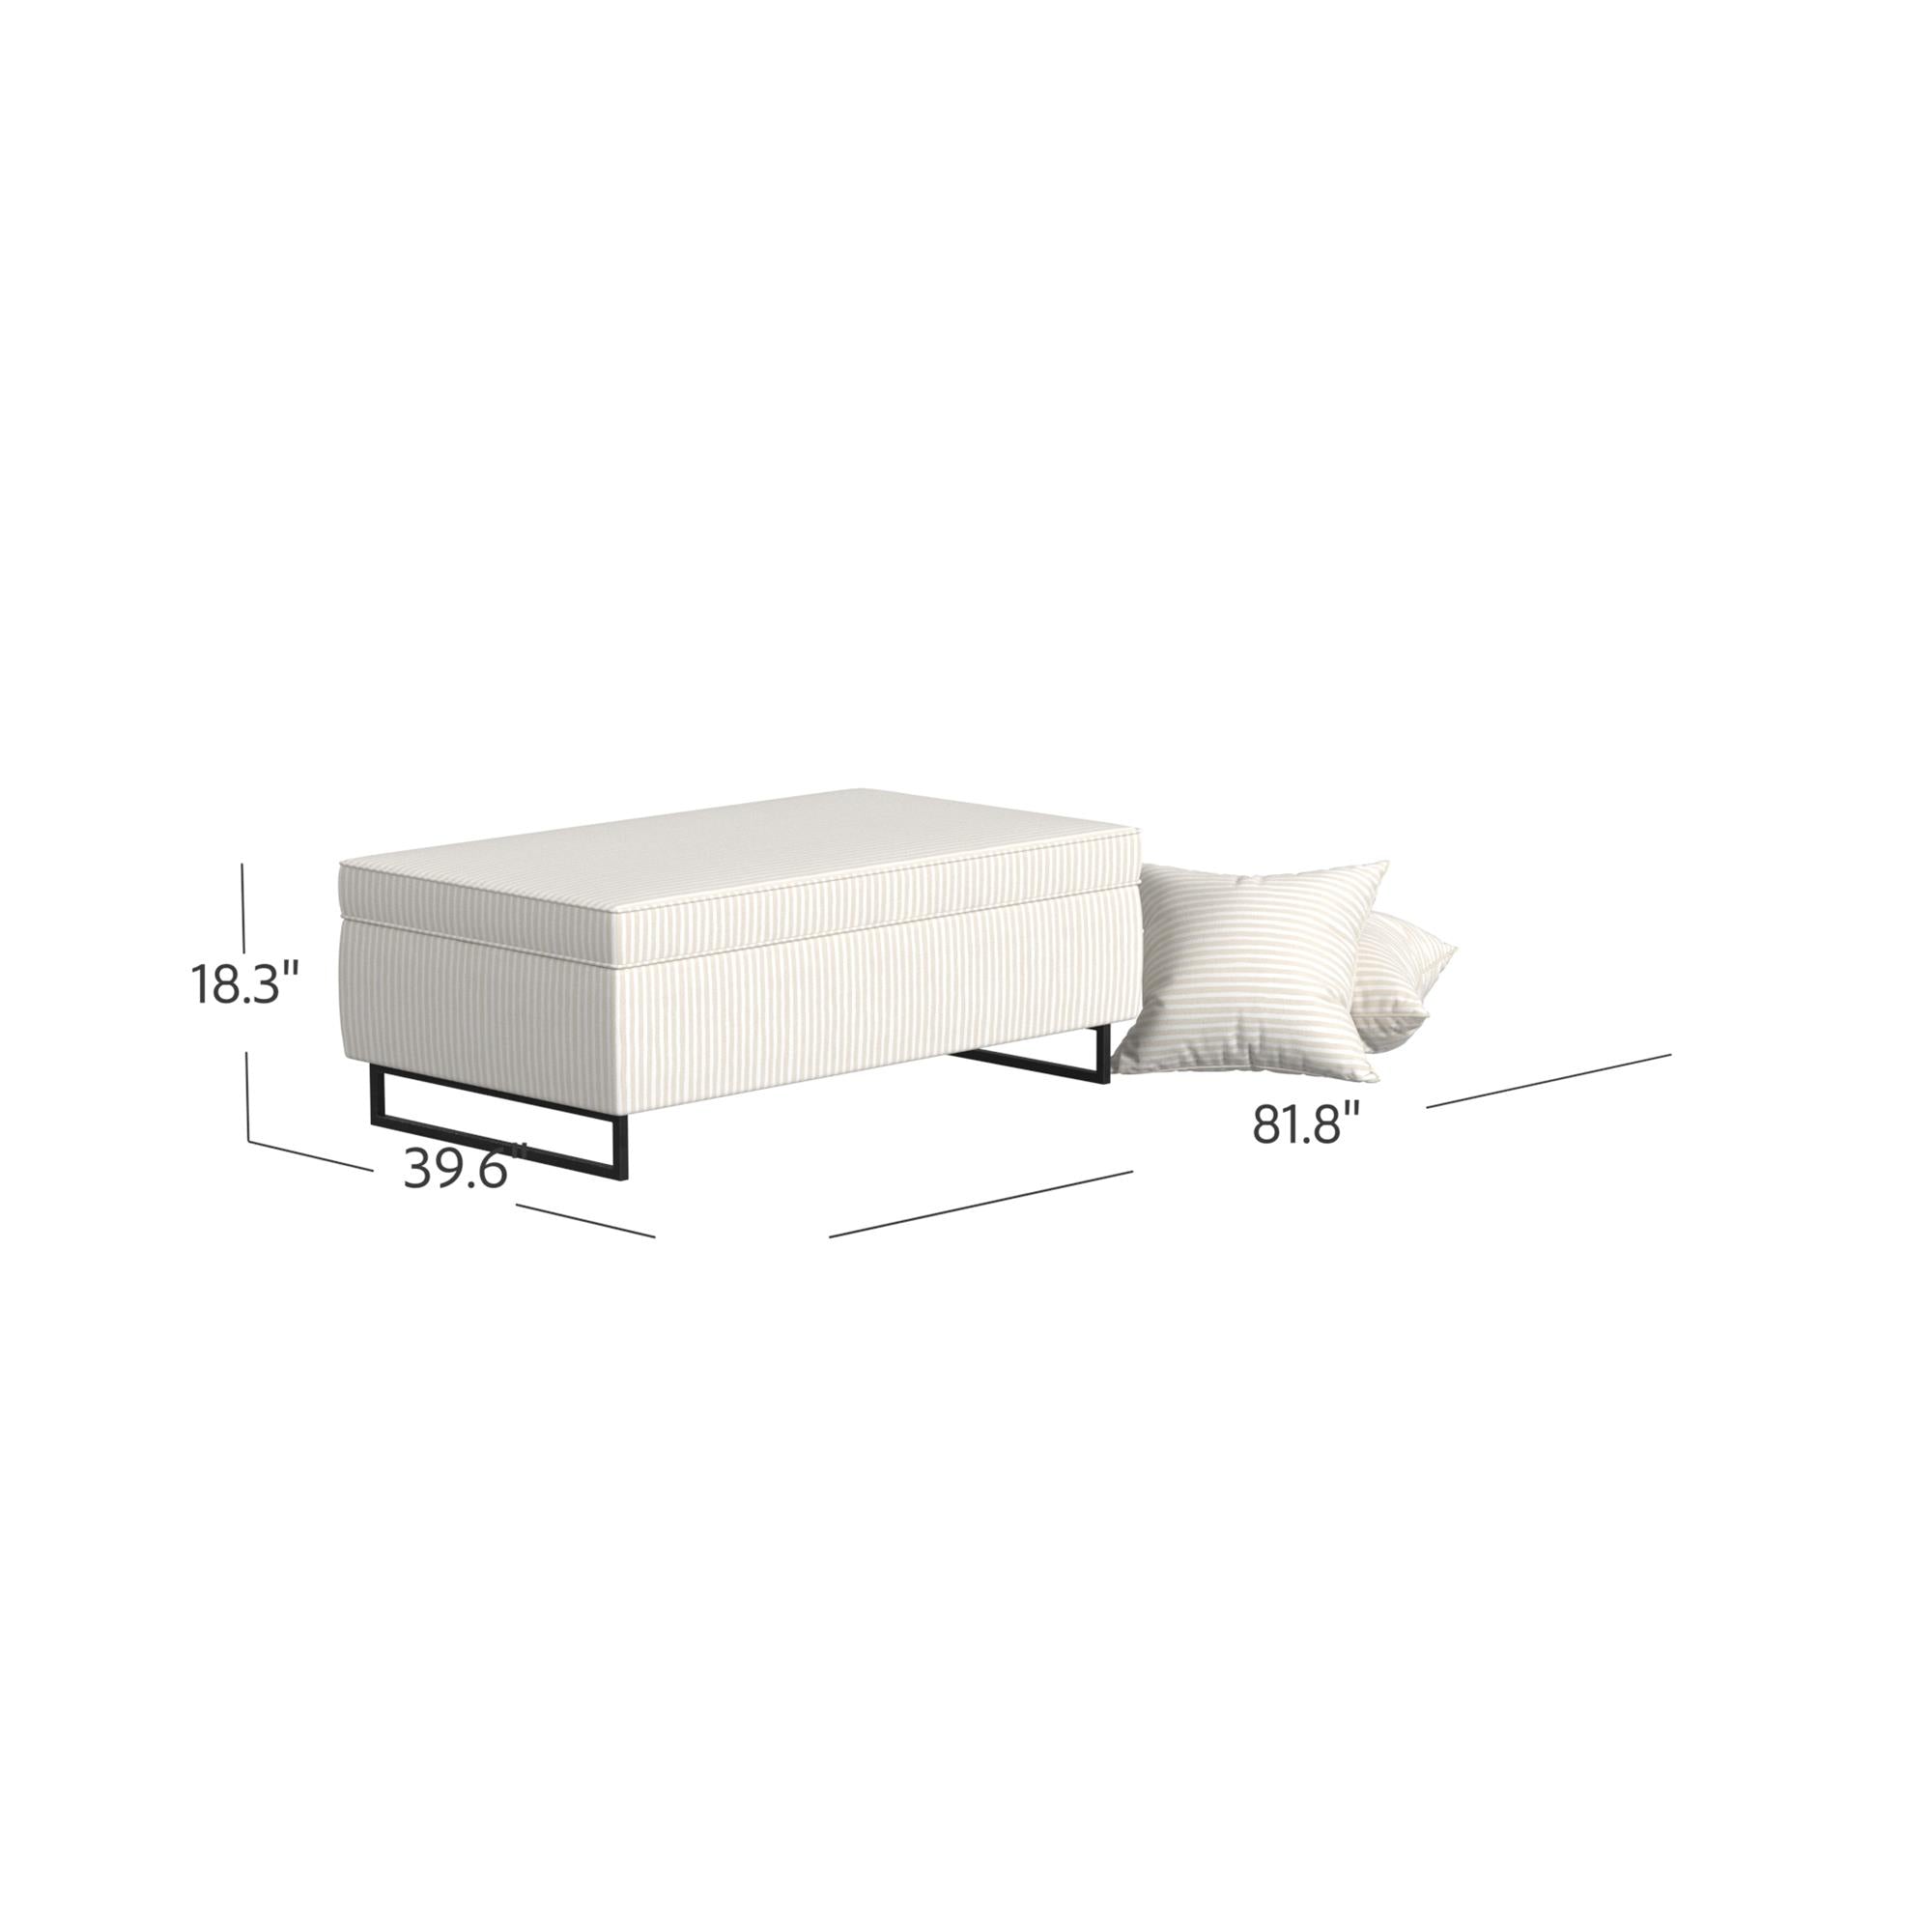  Bleeker Rectangular Storage Ottoman and 2 Pillows Set - Off White Painted Stripe - N/A